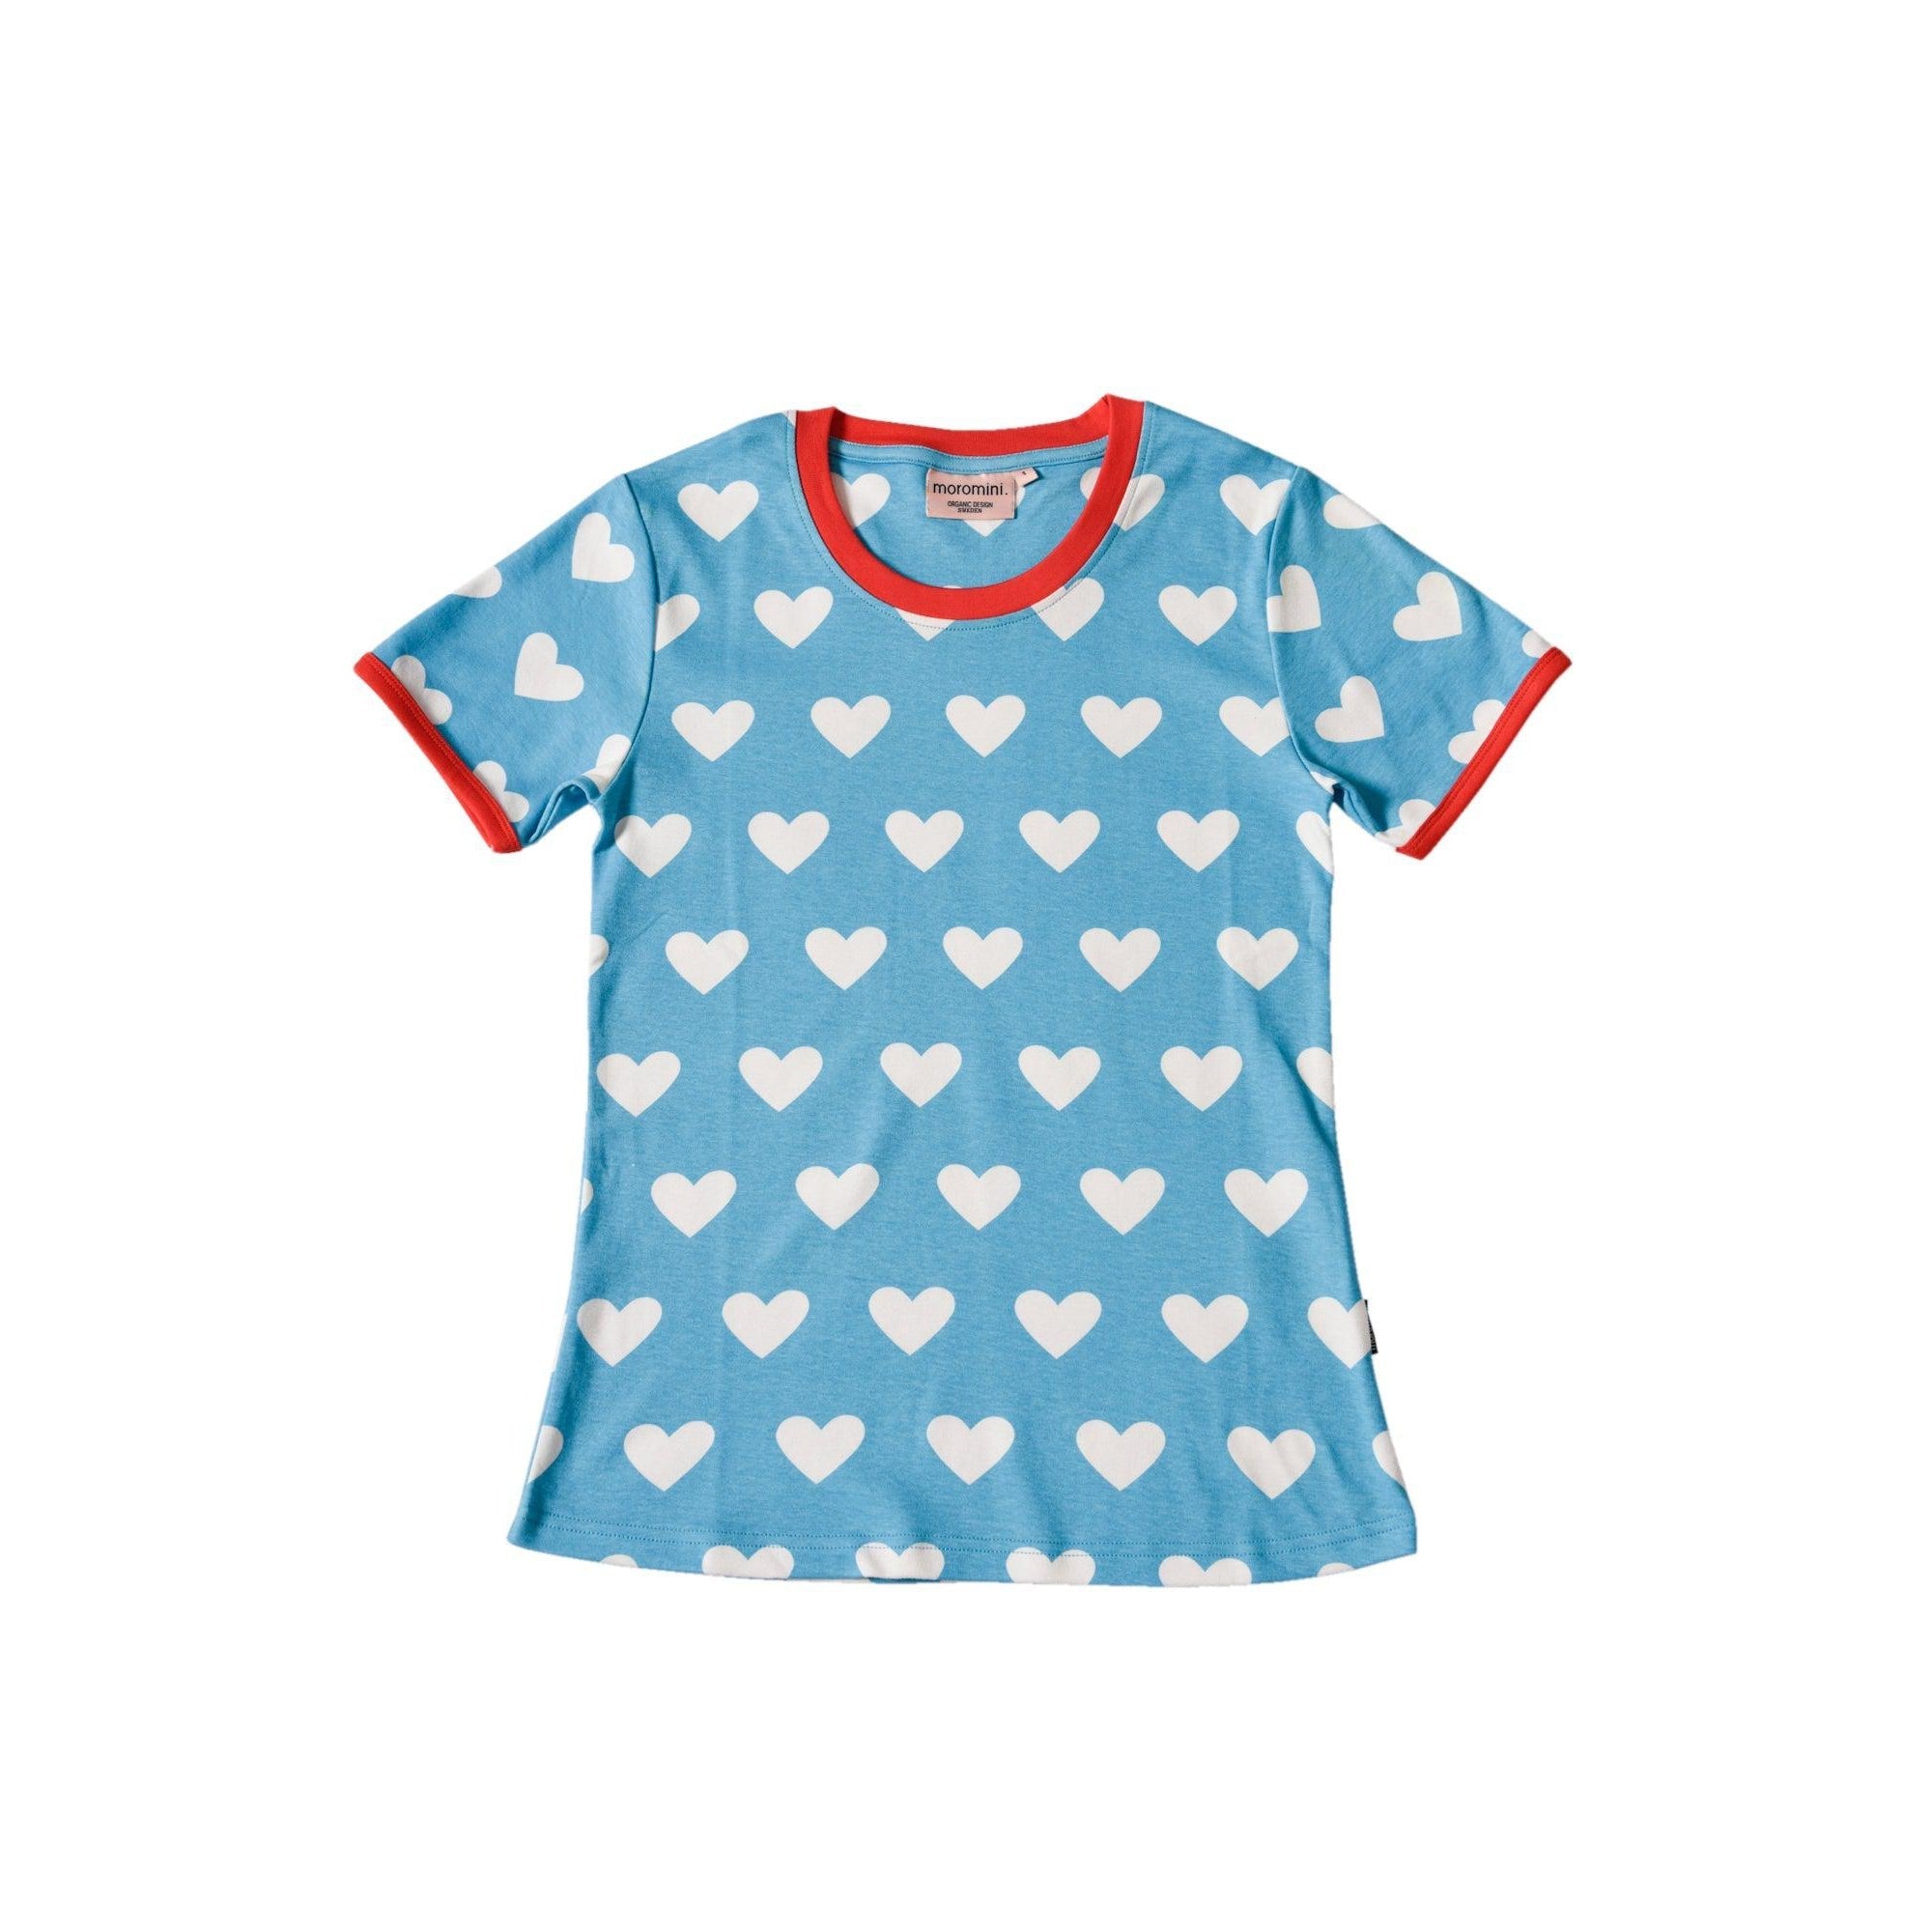 Moromini - Blue Hearts Women's Short Sleeved Top (Small)